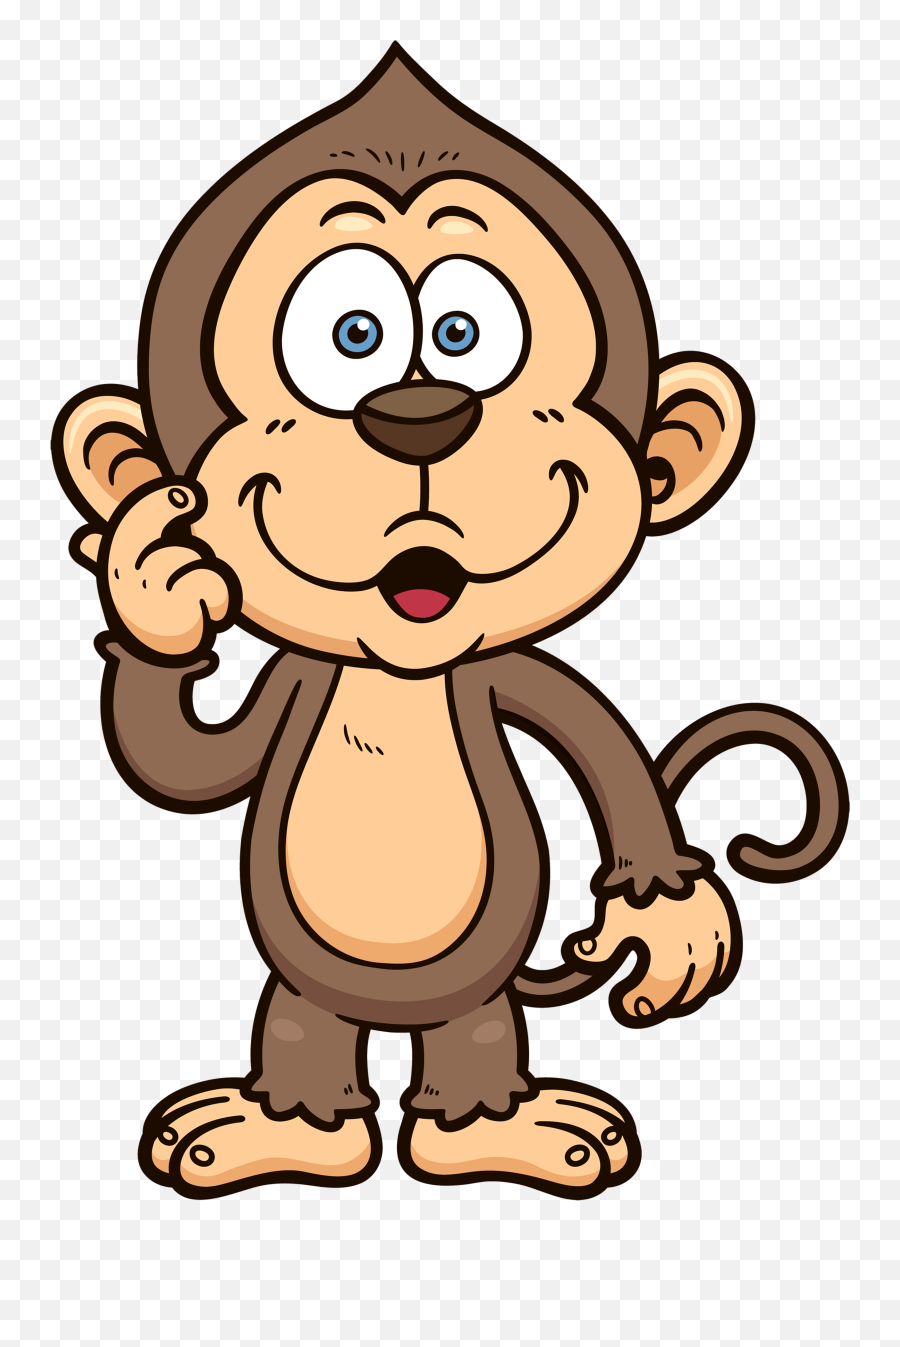 Baby Monkeys Cartoon Clip Art Monkey Cartoon Transparent Background Png Free Transparent Png Images Pngaaa Com